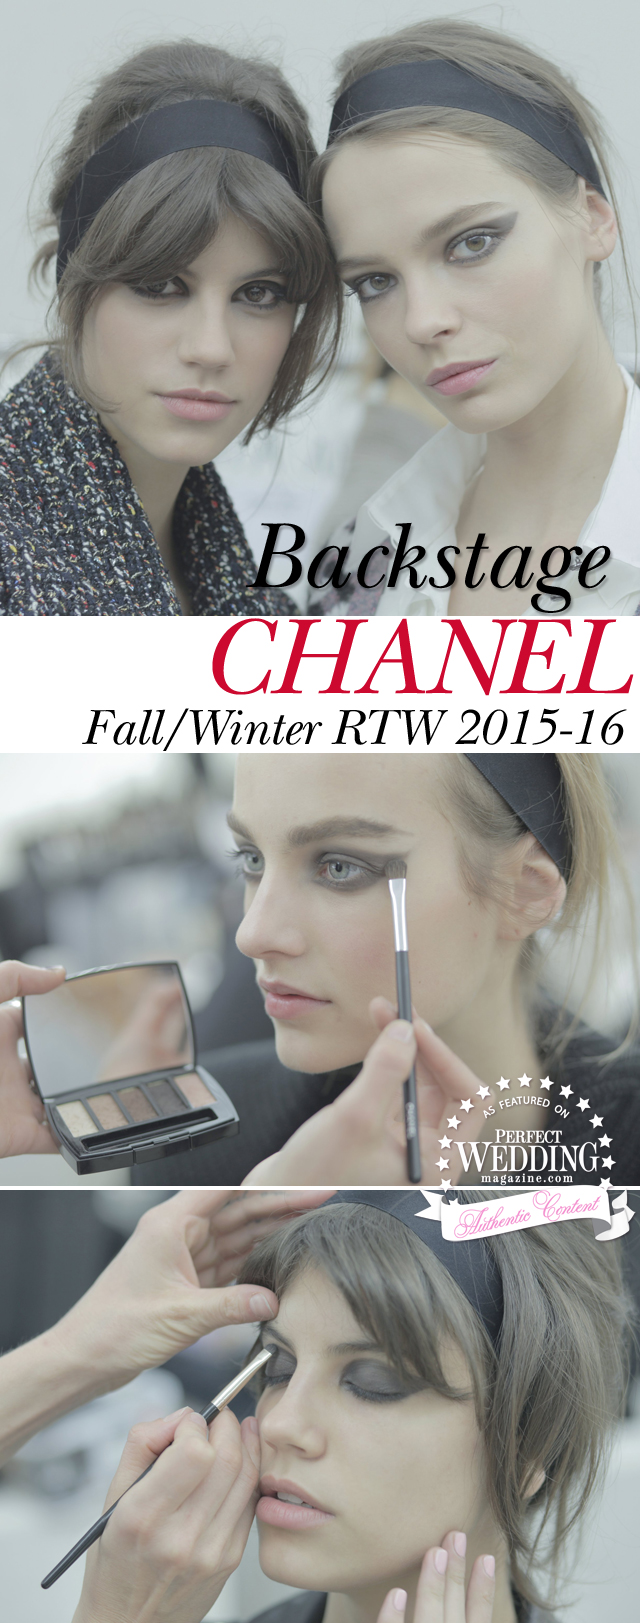 Chanel, Backstage Chanel, RTW Fall/Winter 2015 Show, Beauty, Beauty Tips, Perfect Wedding Magazine